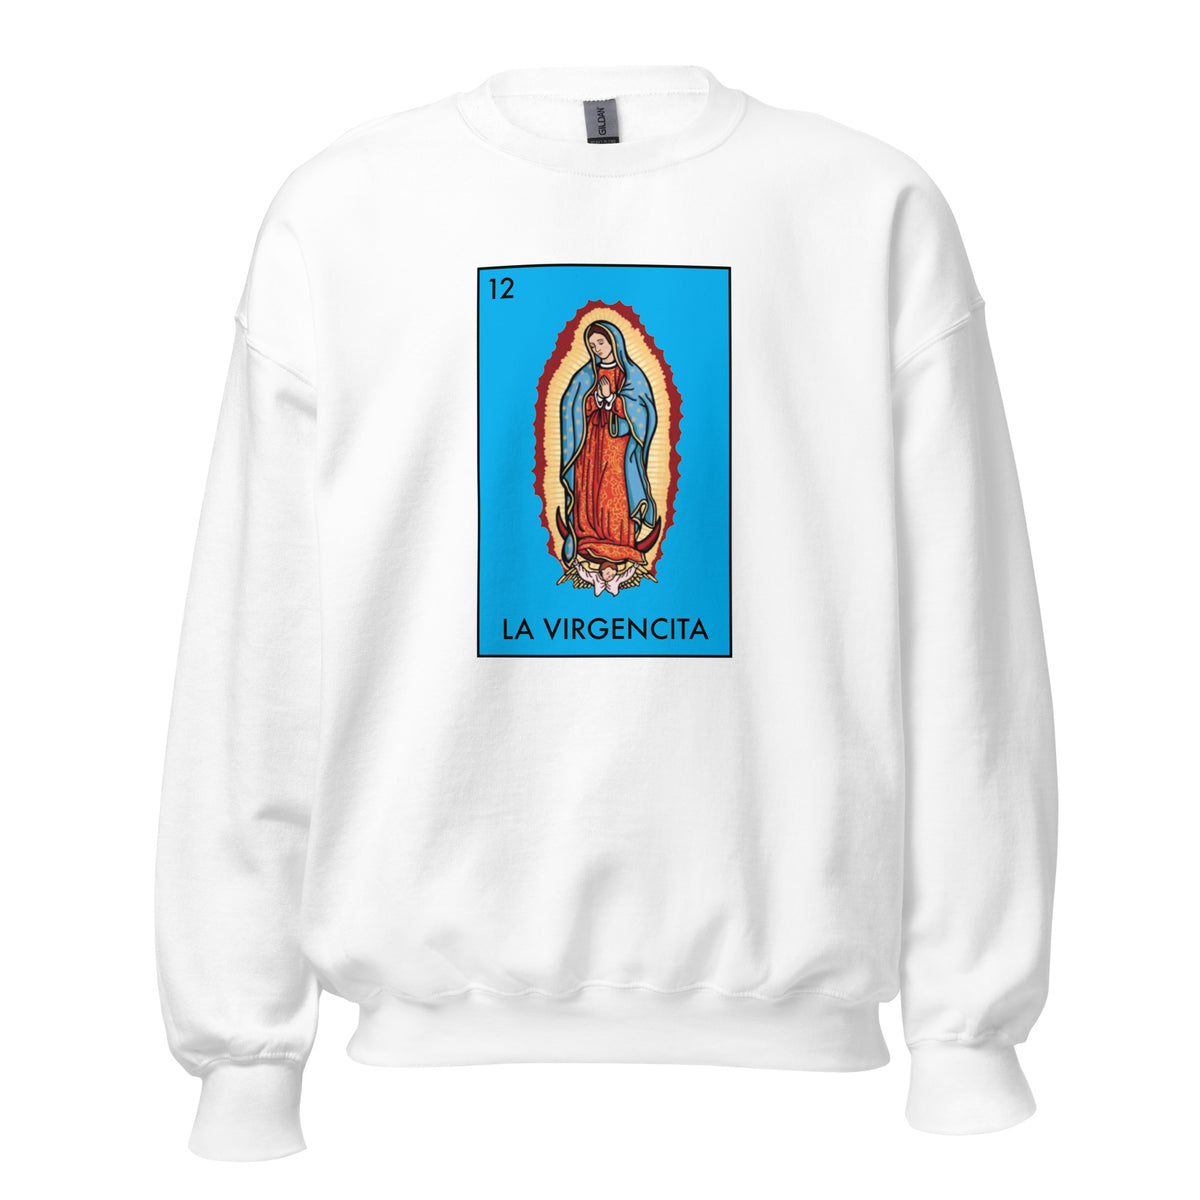 La Virgencita Sweatshirt